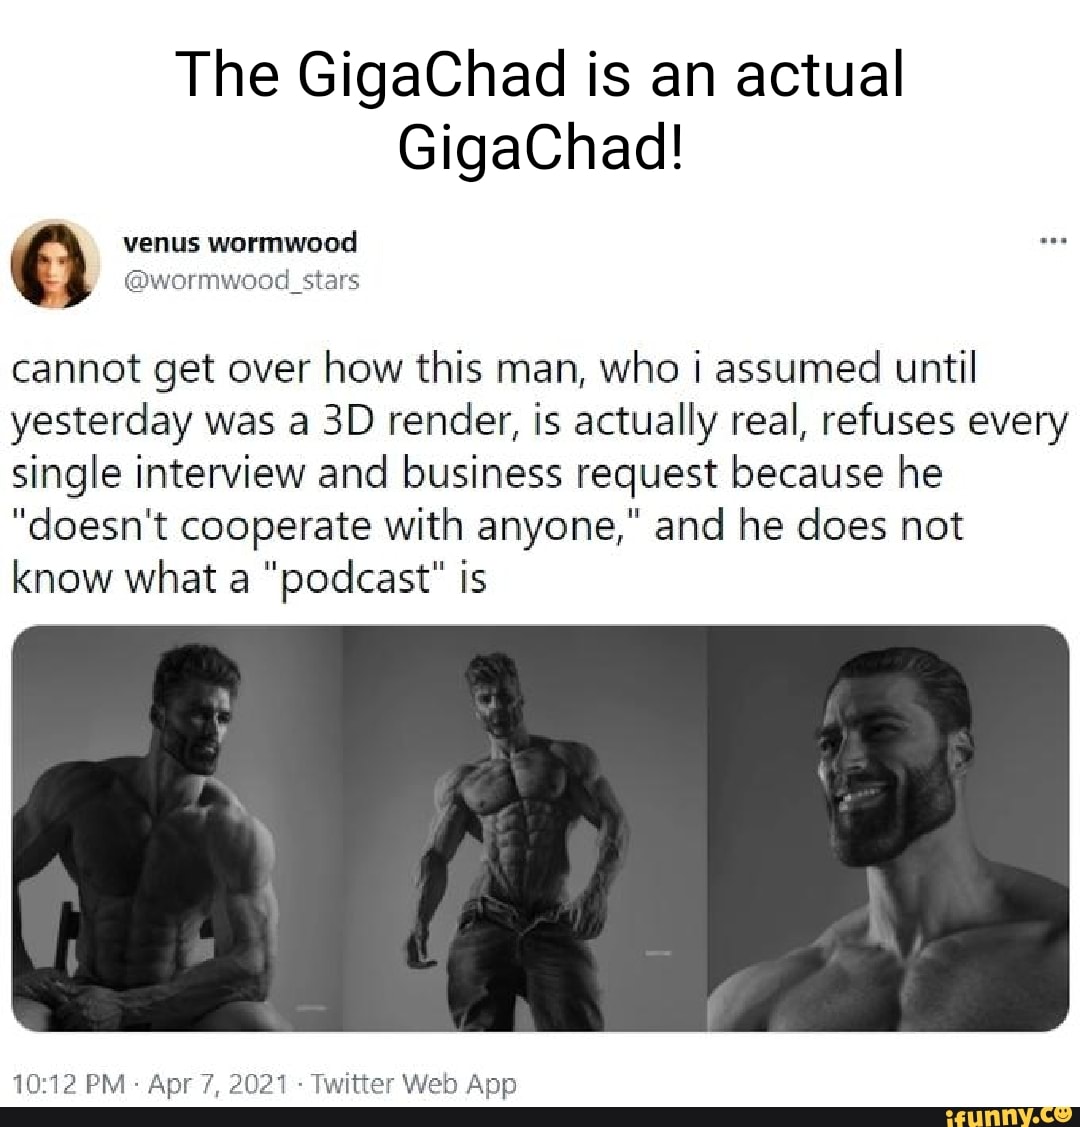 he is real, GigaChad